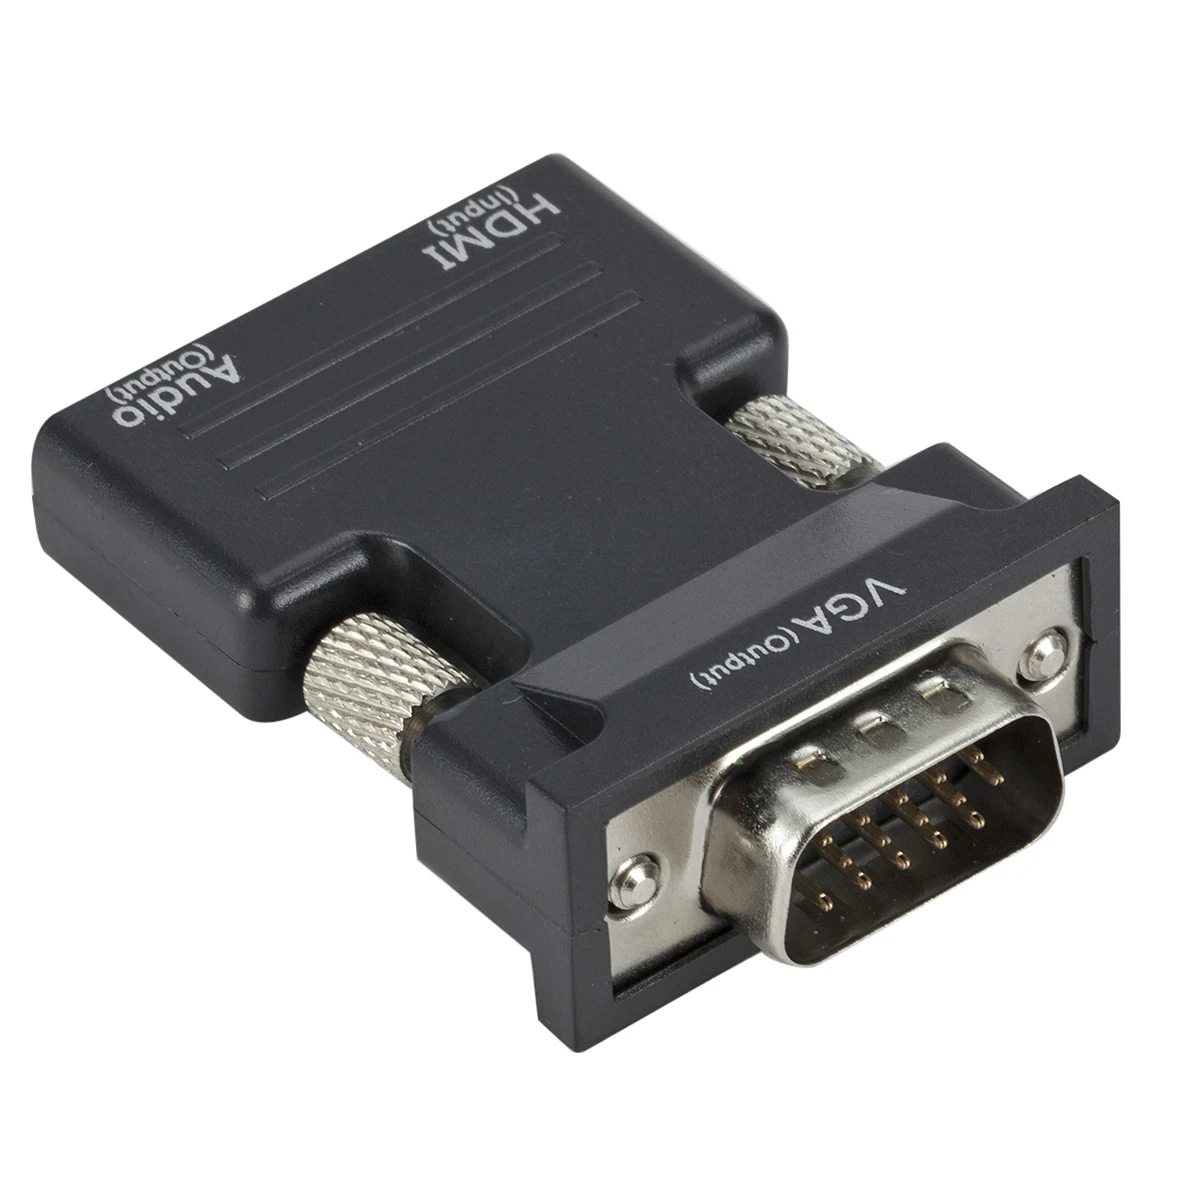 Переходник vga телевизор. HDMI VGA db9 переходник. Переходник VGA папа на HDMI мама. USB переходник HDMI (M-output) - VGA (F-input) с аудио. Переходник с VGA на HDMI для монитора.